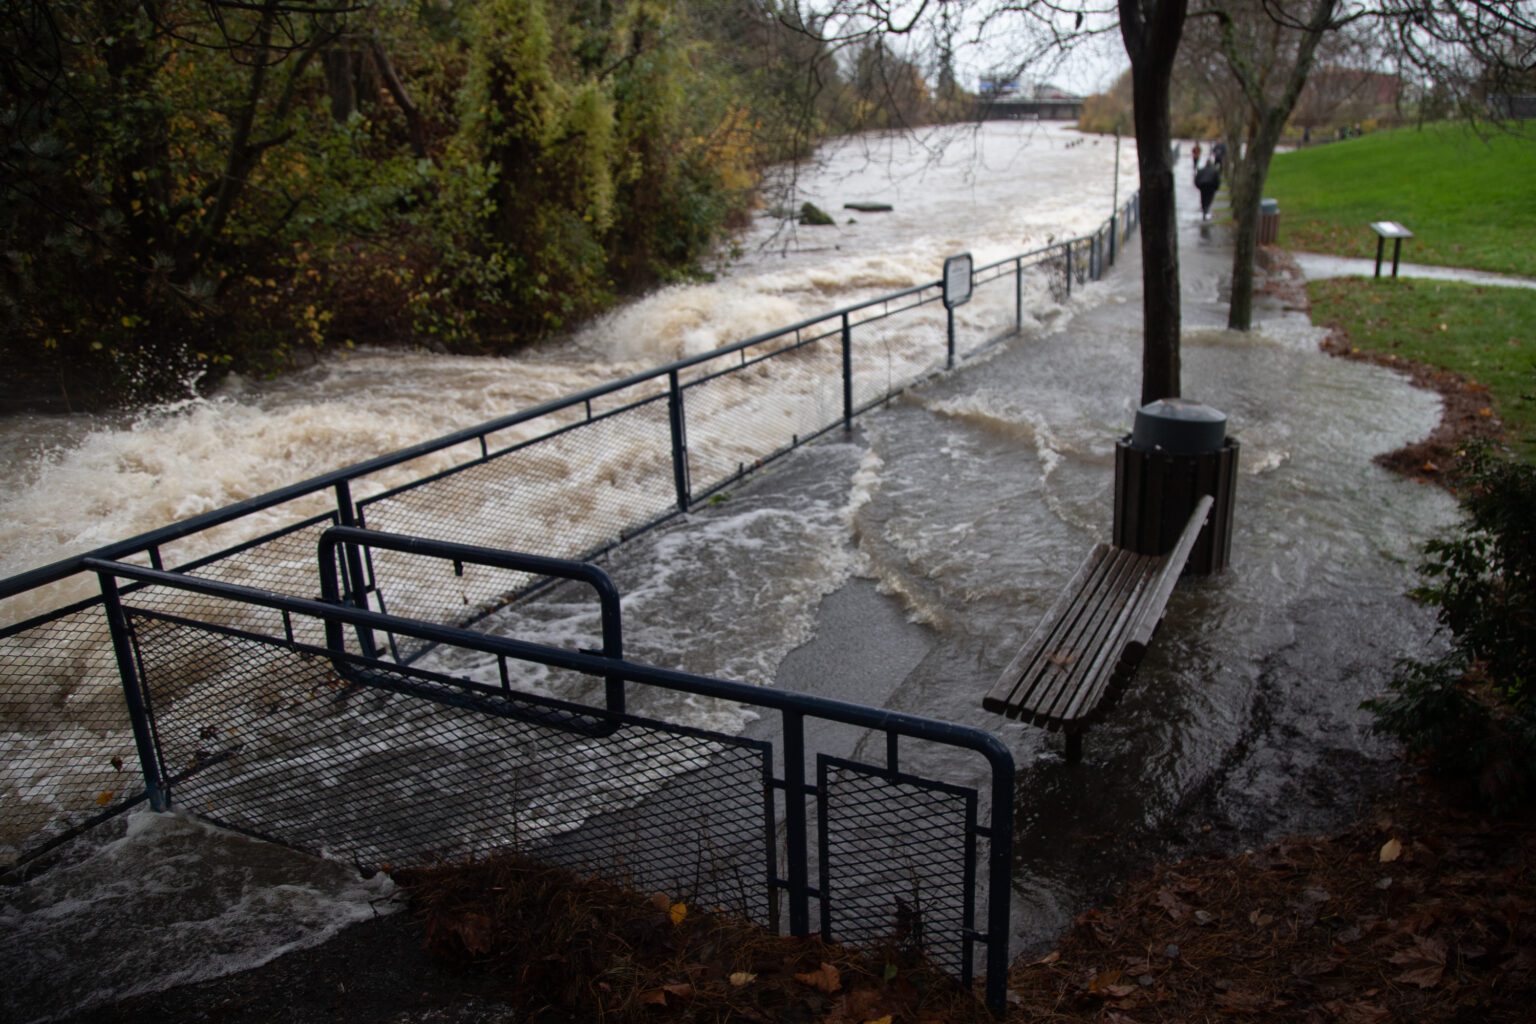 Whatcom Creek floods over its banks at Maritime Heritage Park on Nov. 15